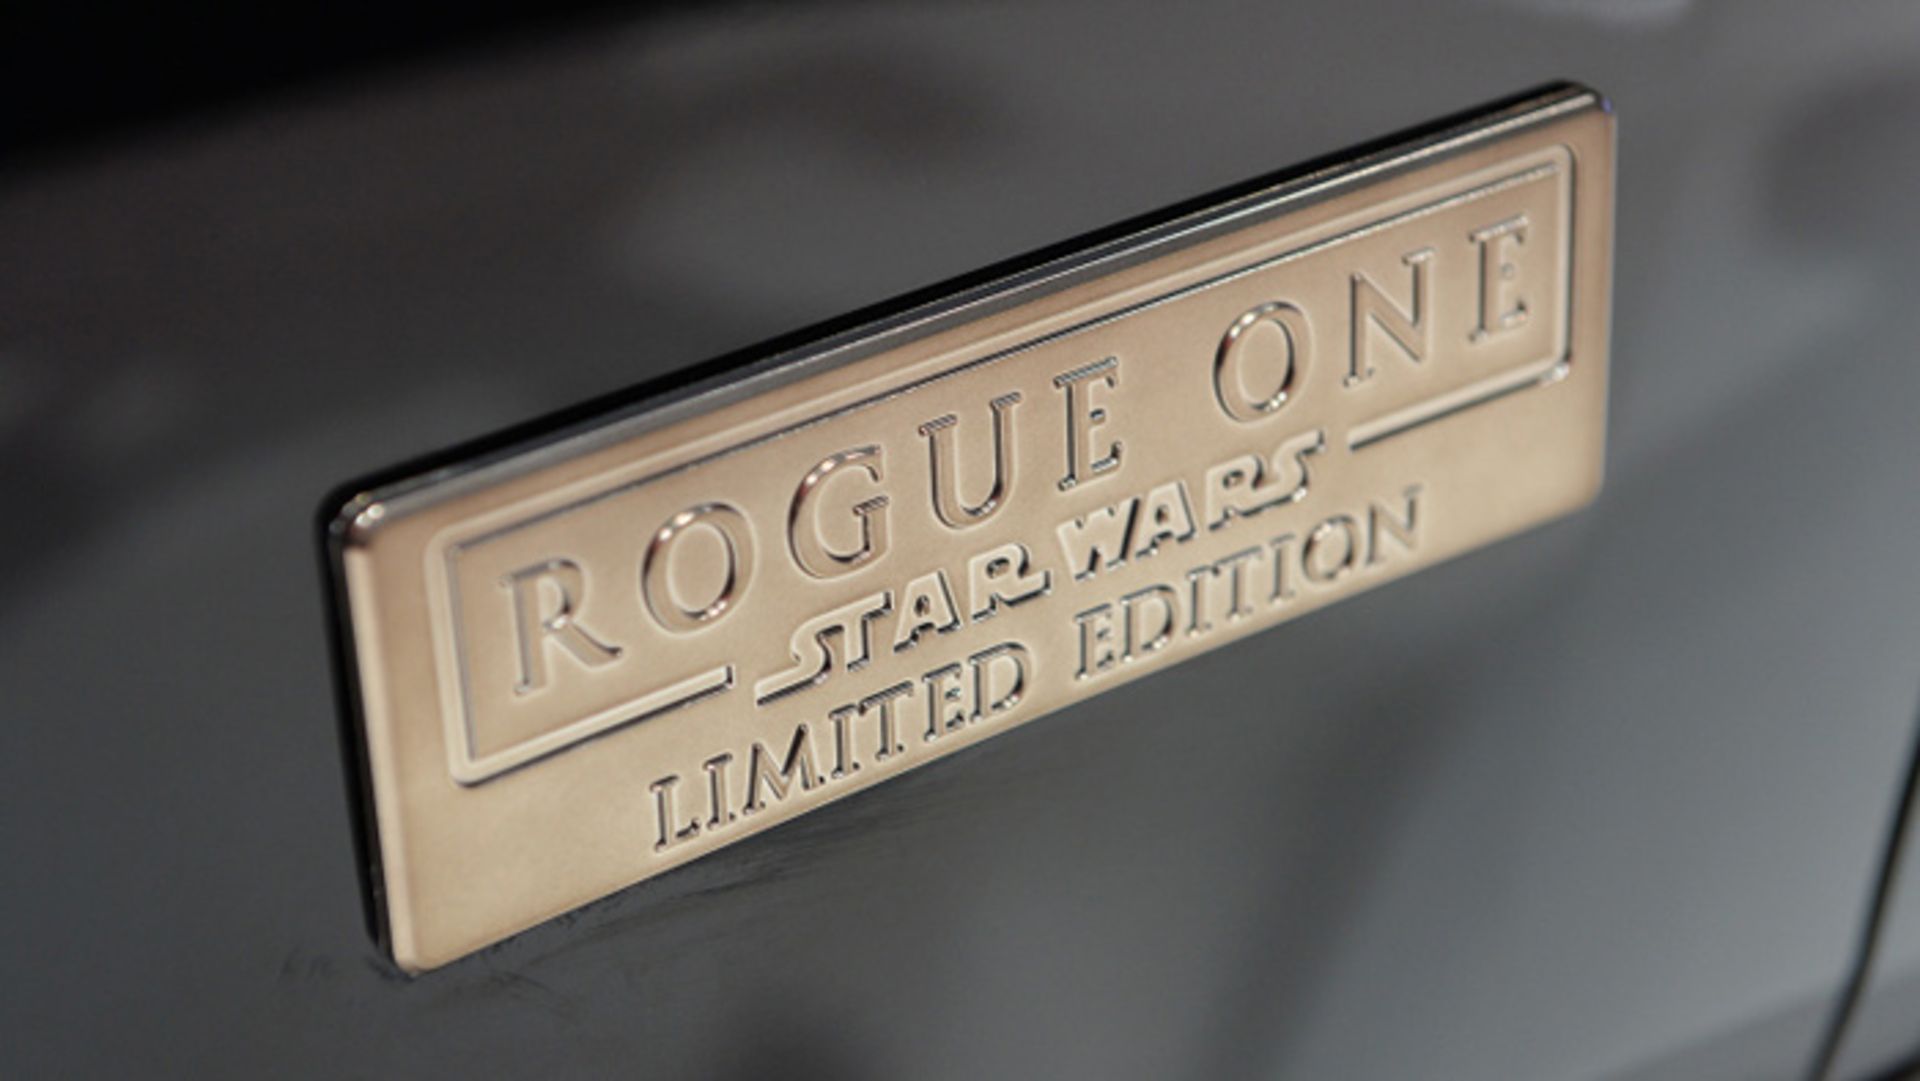 Nissan Rogue One Star Wars